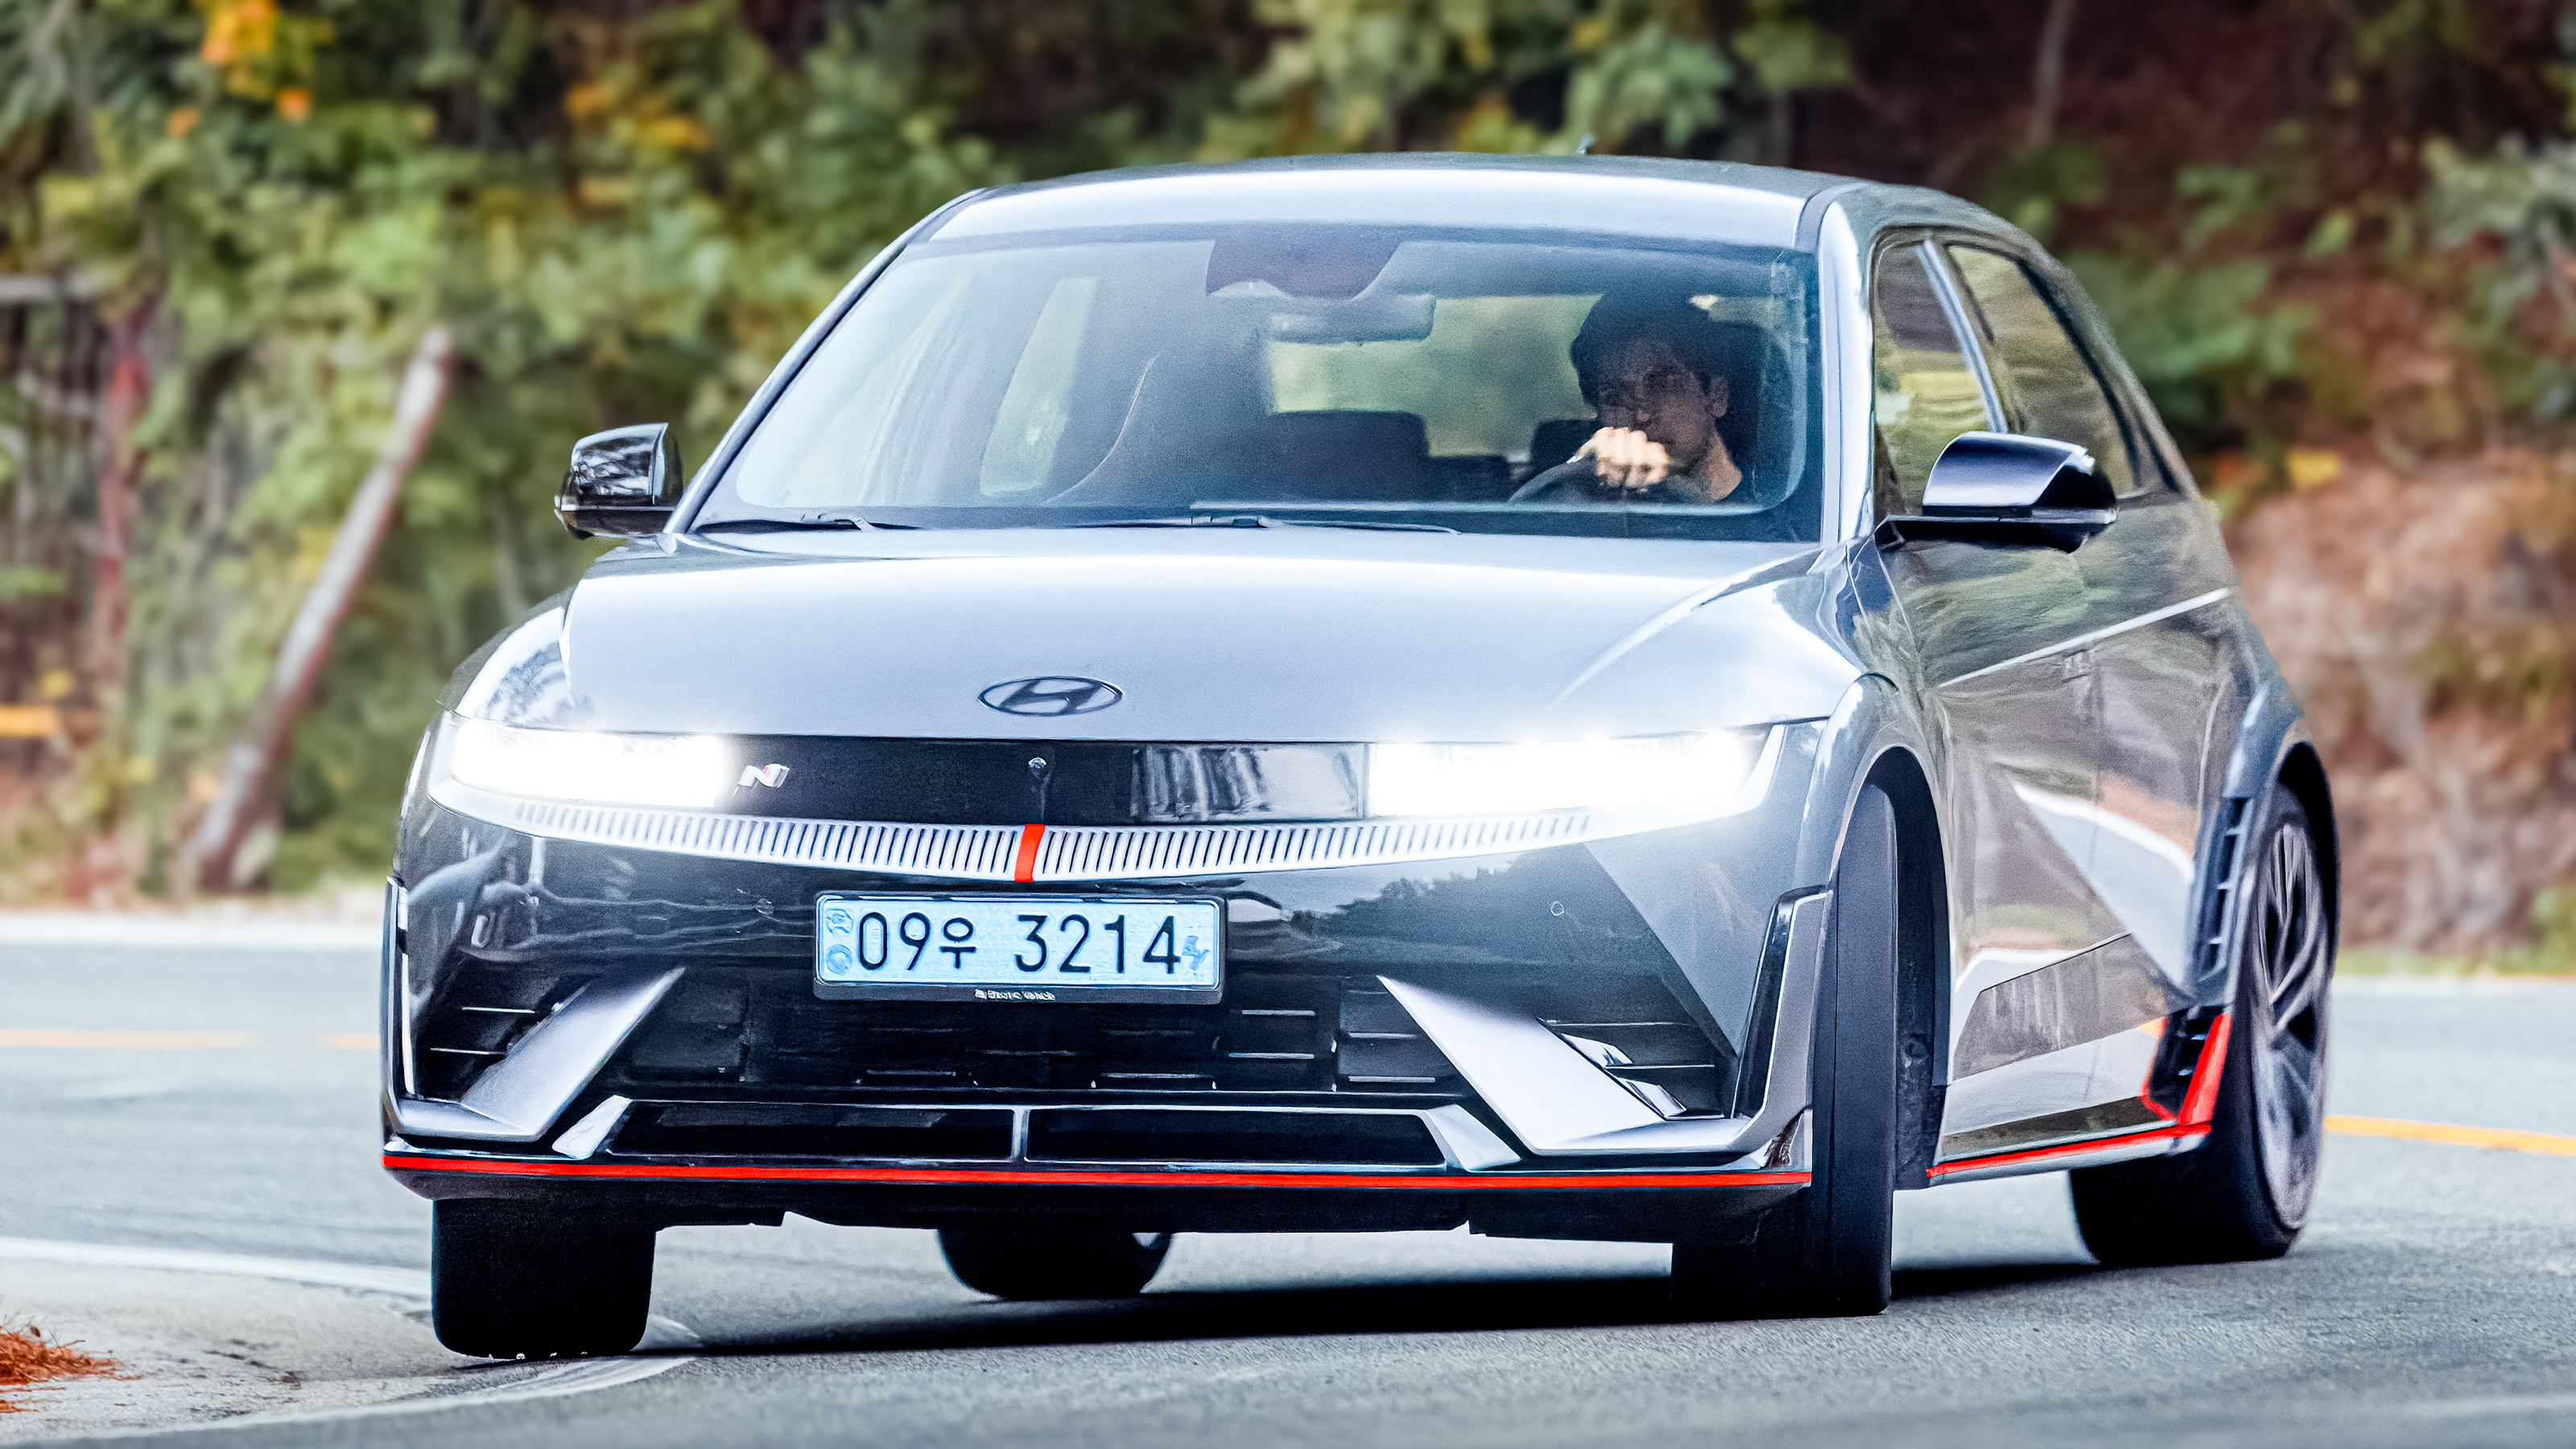 Hyundai Ioniq 5 review: our new favourite EV